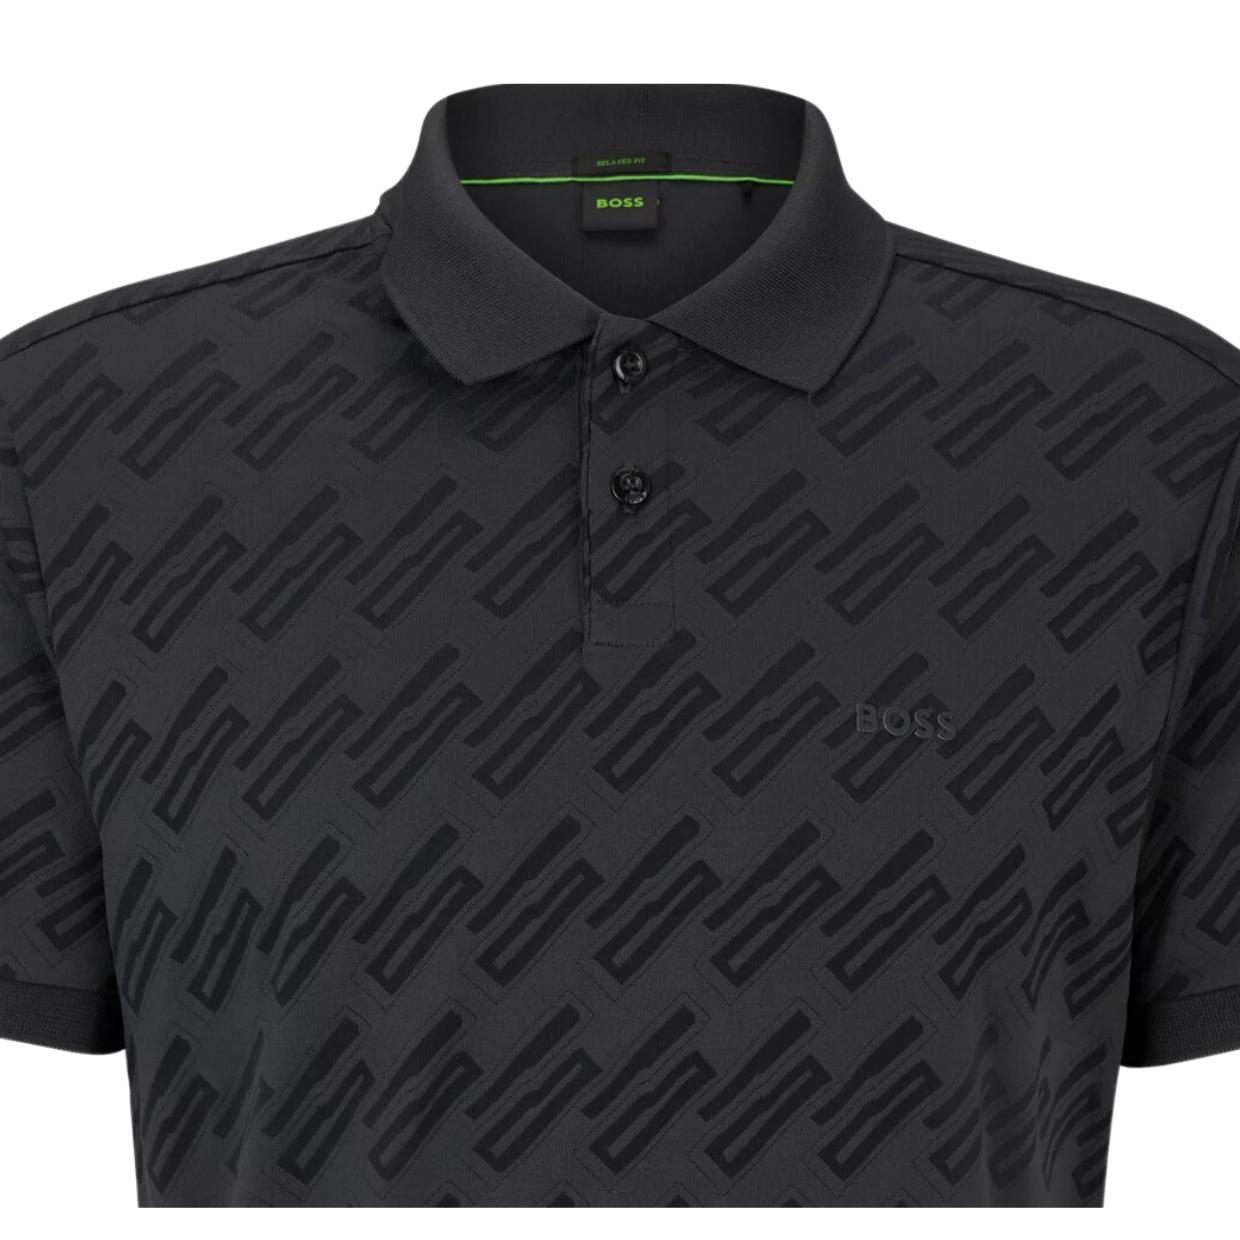 BOSS Pirax Monogram Jacquard Dark Grey Polo Shirt